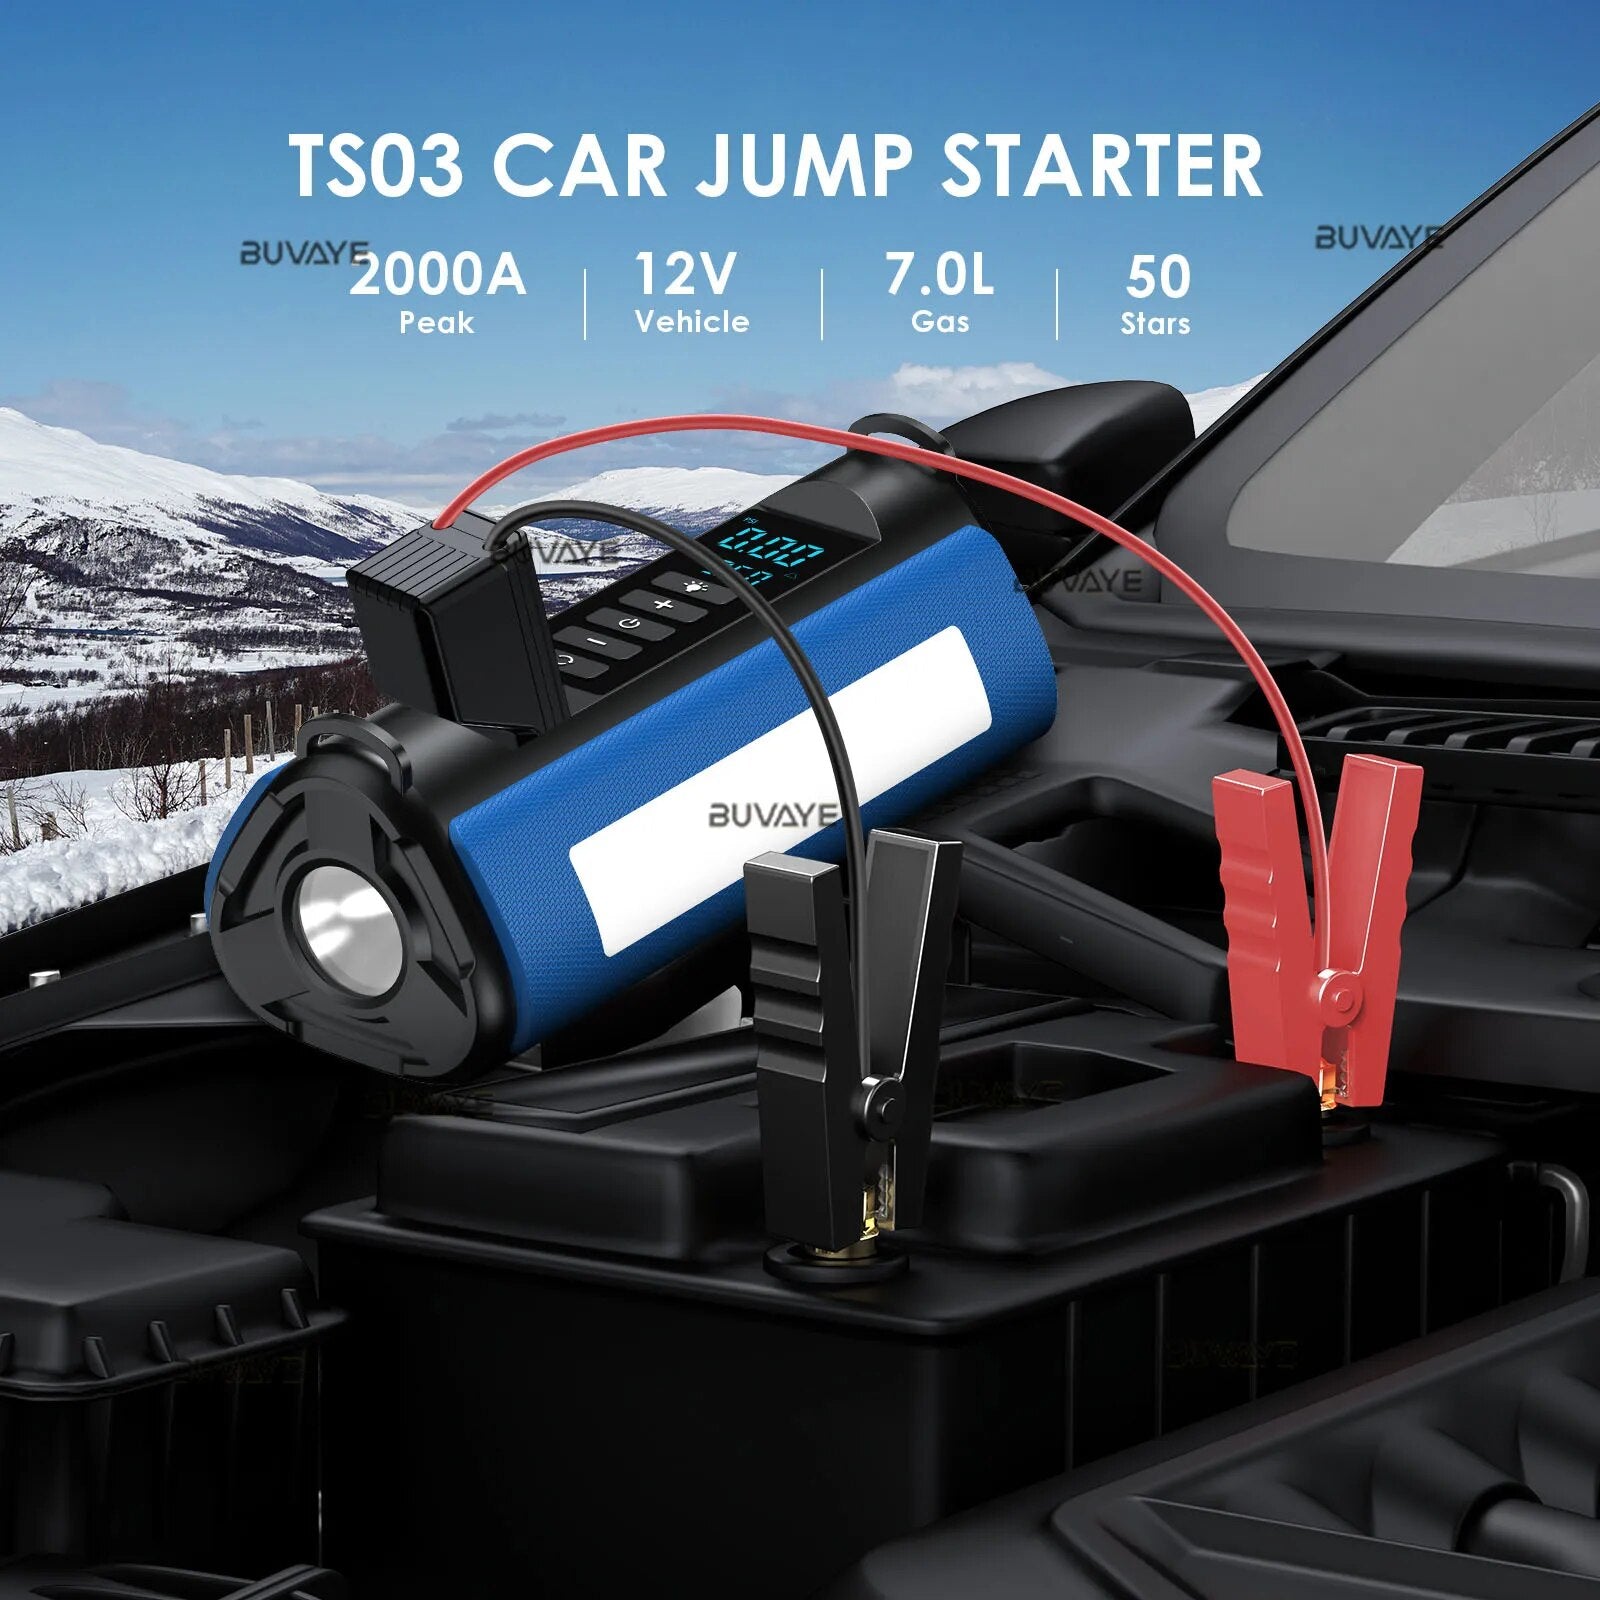 BUVAYE Car Jump Starter Air Pump Outdoor Portable Power Lamp Portable Air Compressor Multifunctional Tire Inflator with EVA Bag